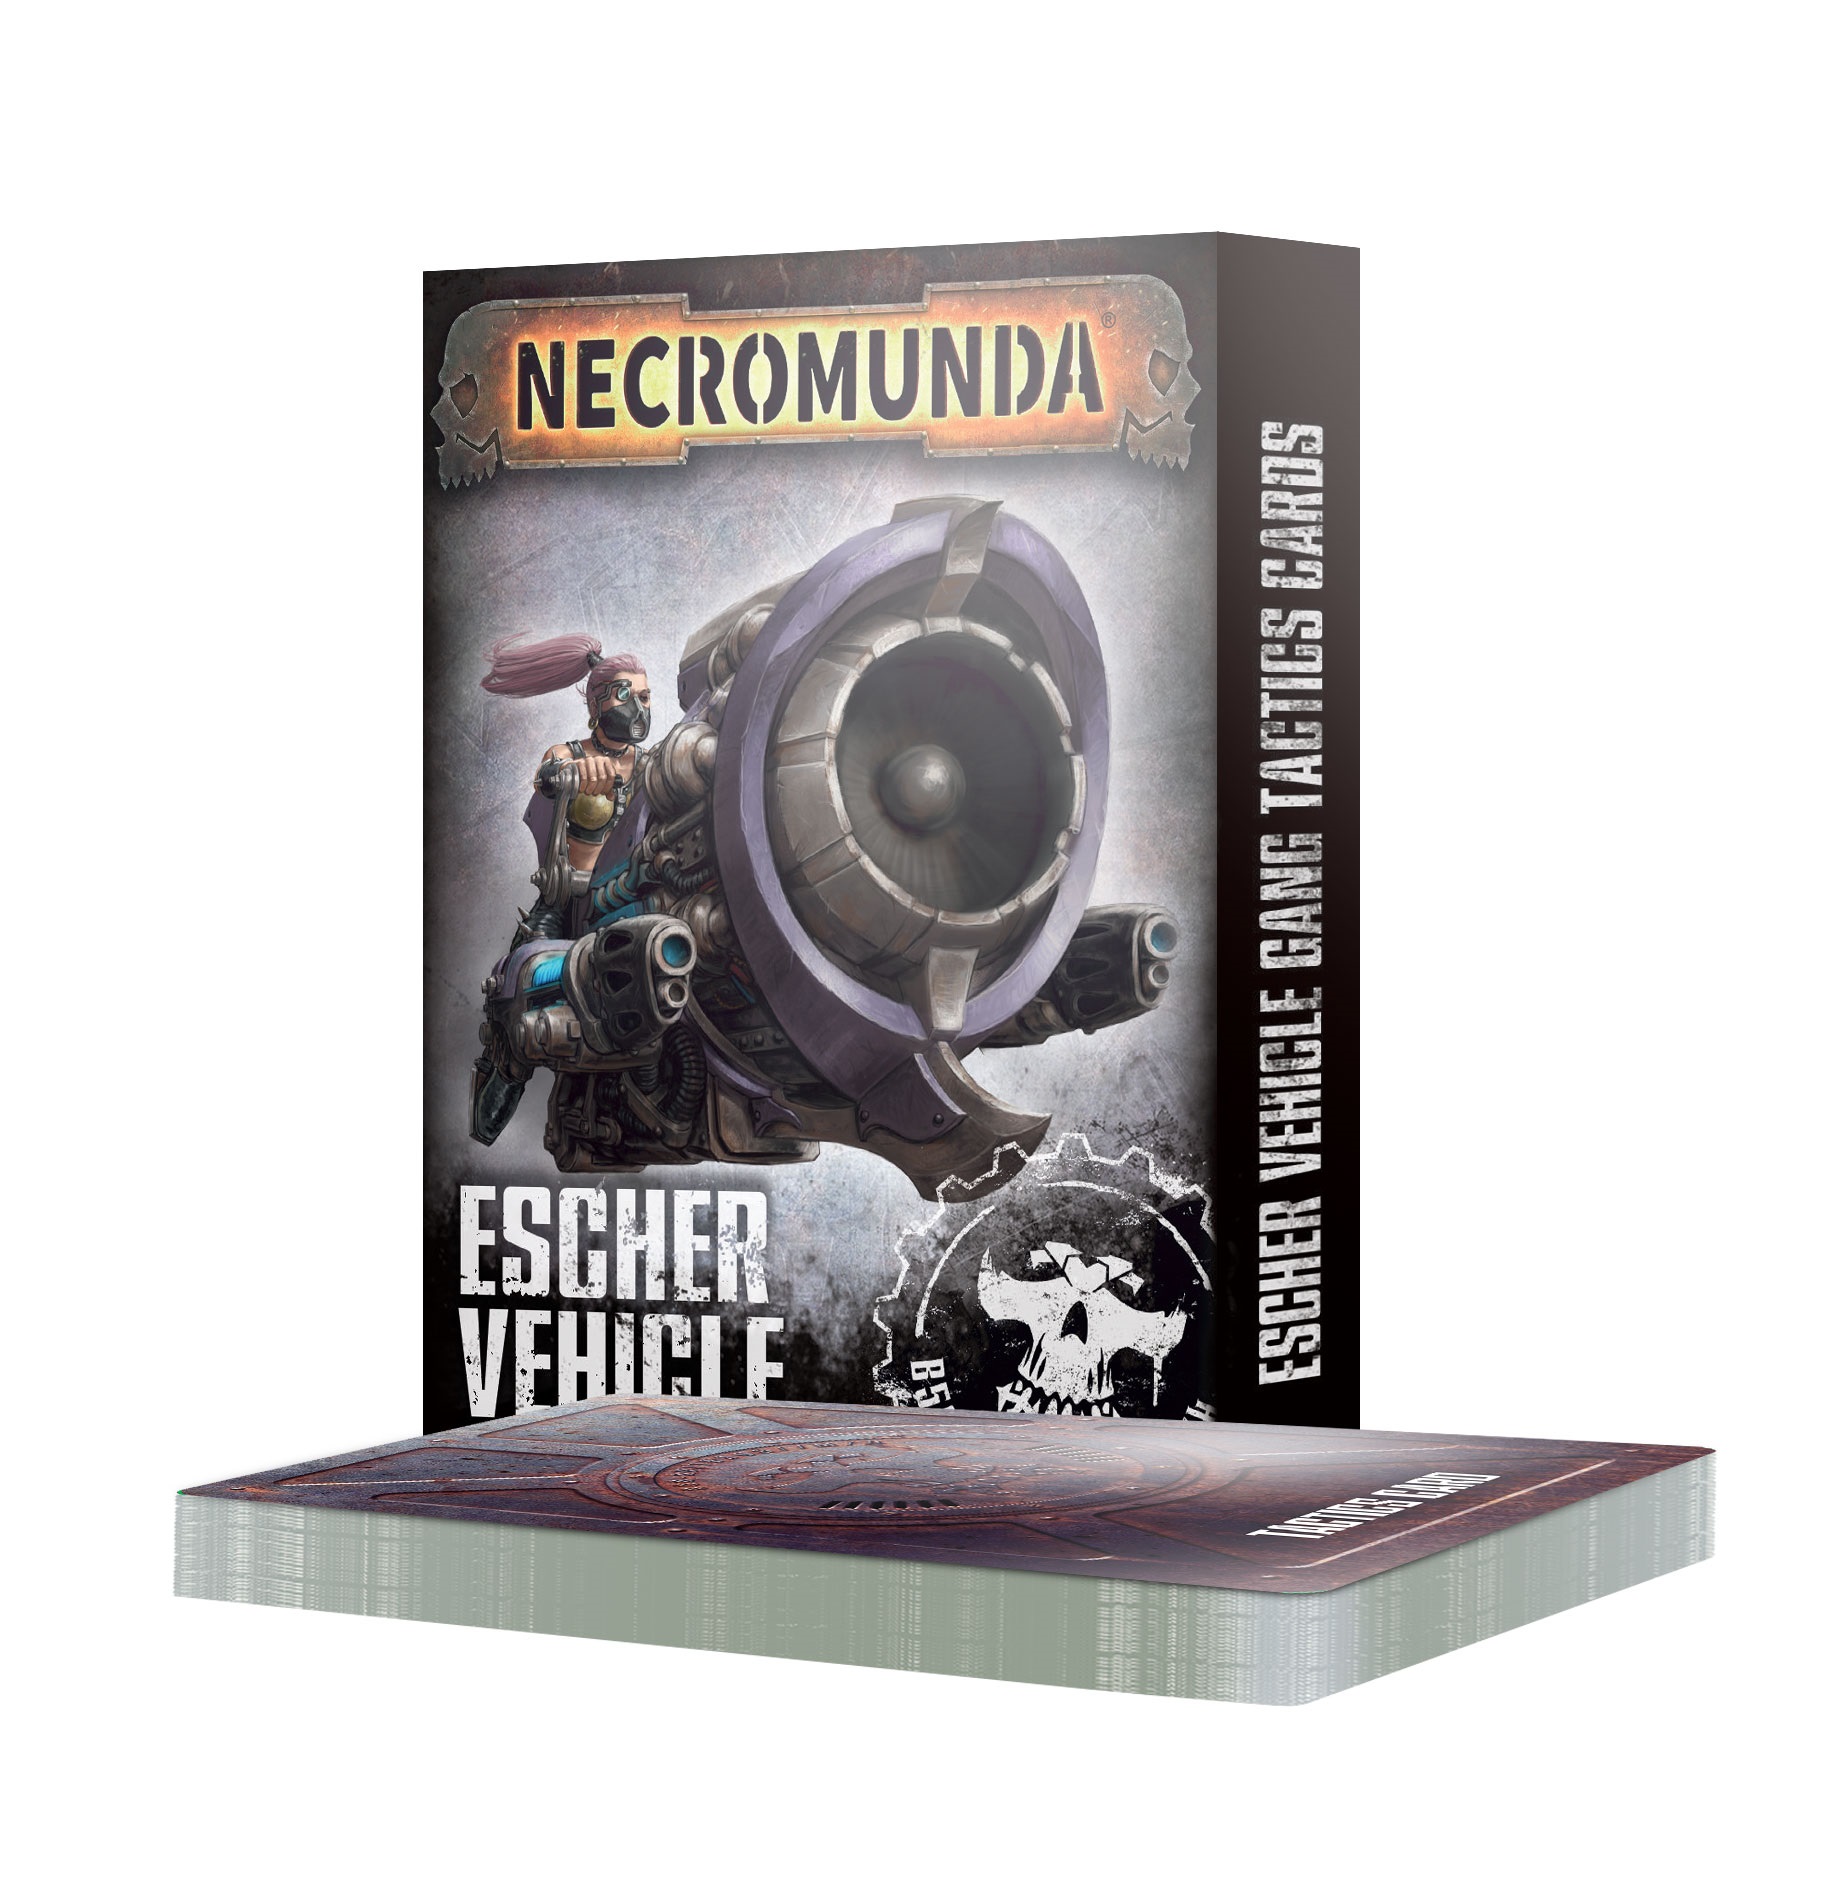 Necromunda: Escher Vehicle Gang Tactis cards